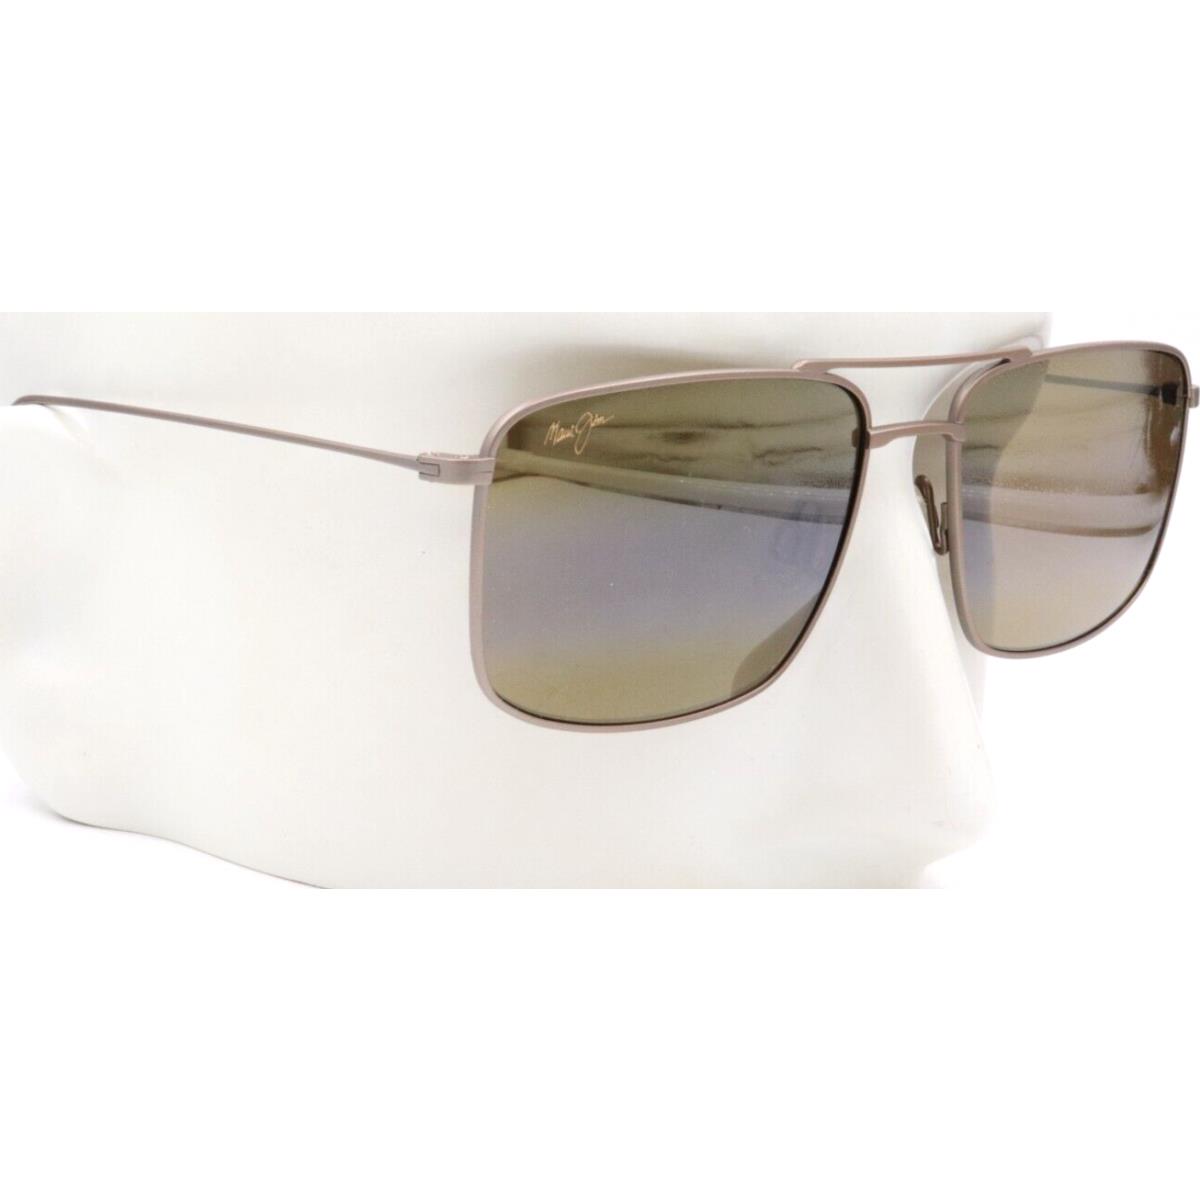 Maui Jim Aeko Satin Sepia Titanium Aviator Sunglasses 55mm H886-01